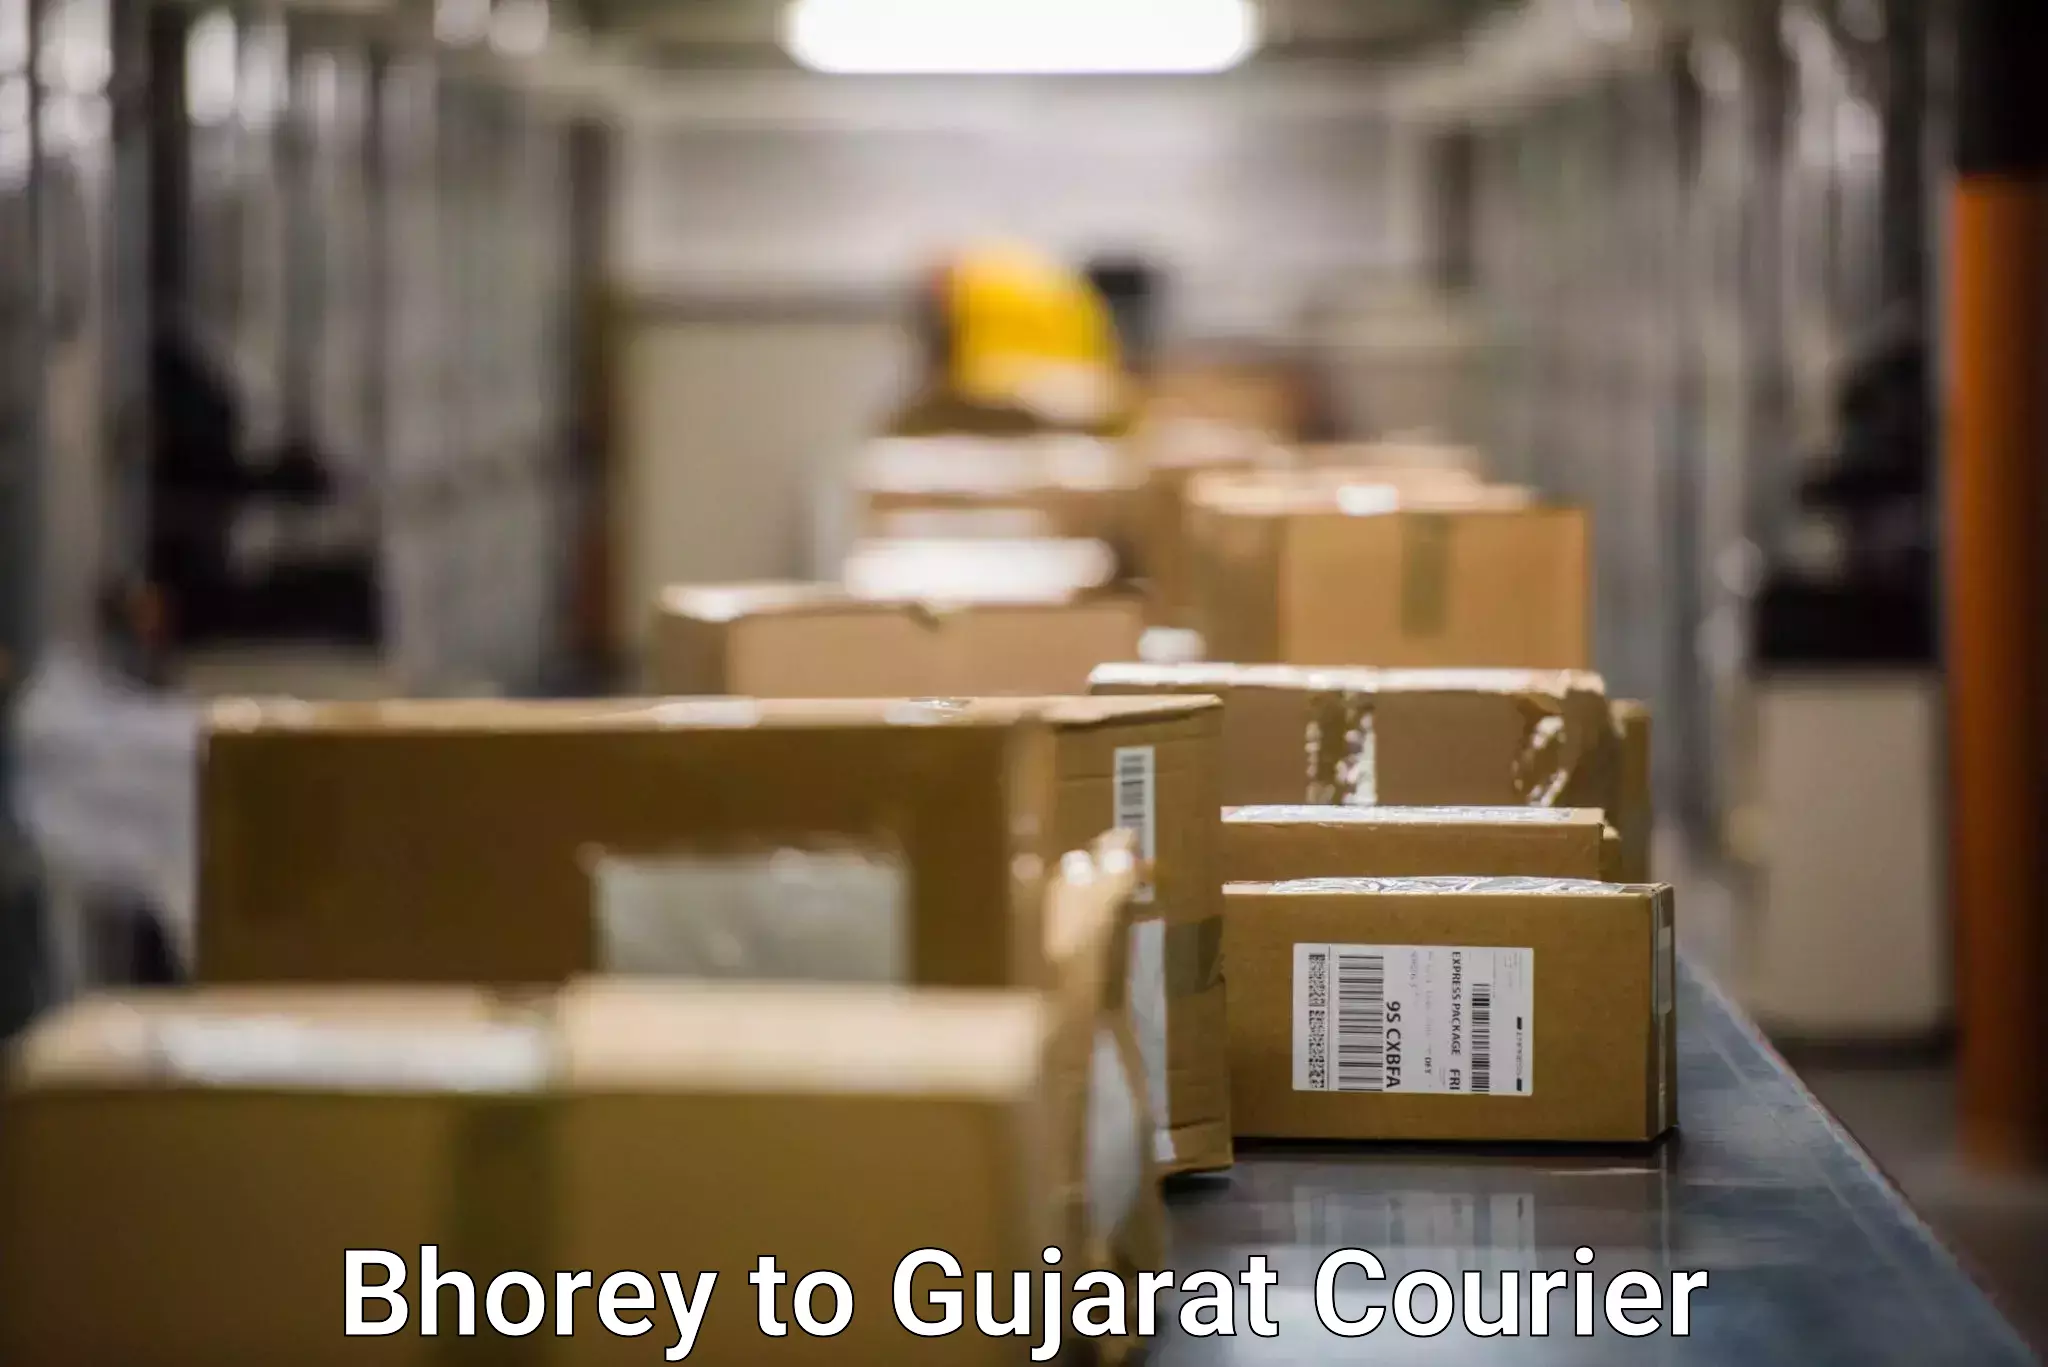 Efficient order fulfillment Bhorey to Gujarat